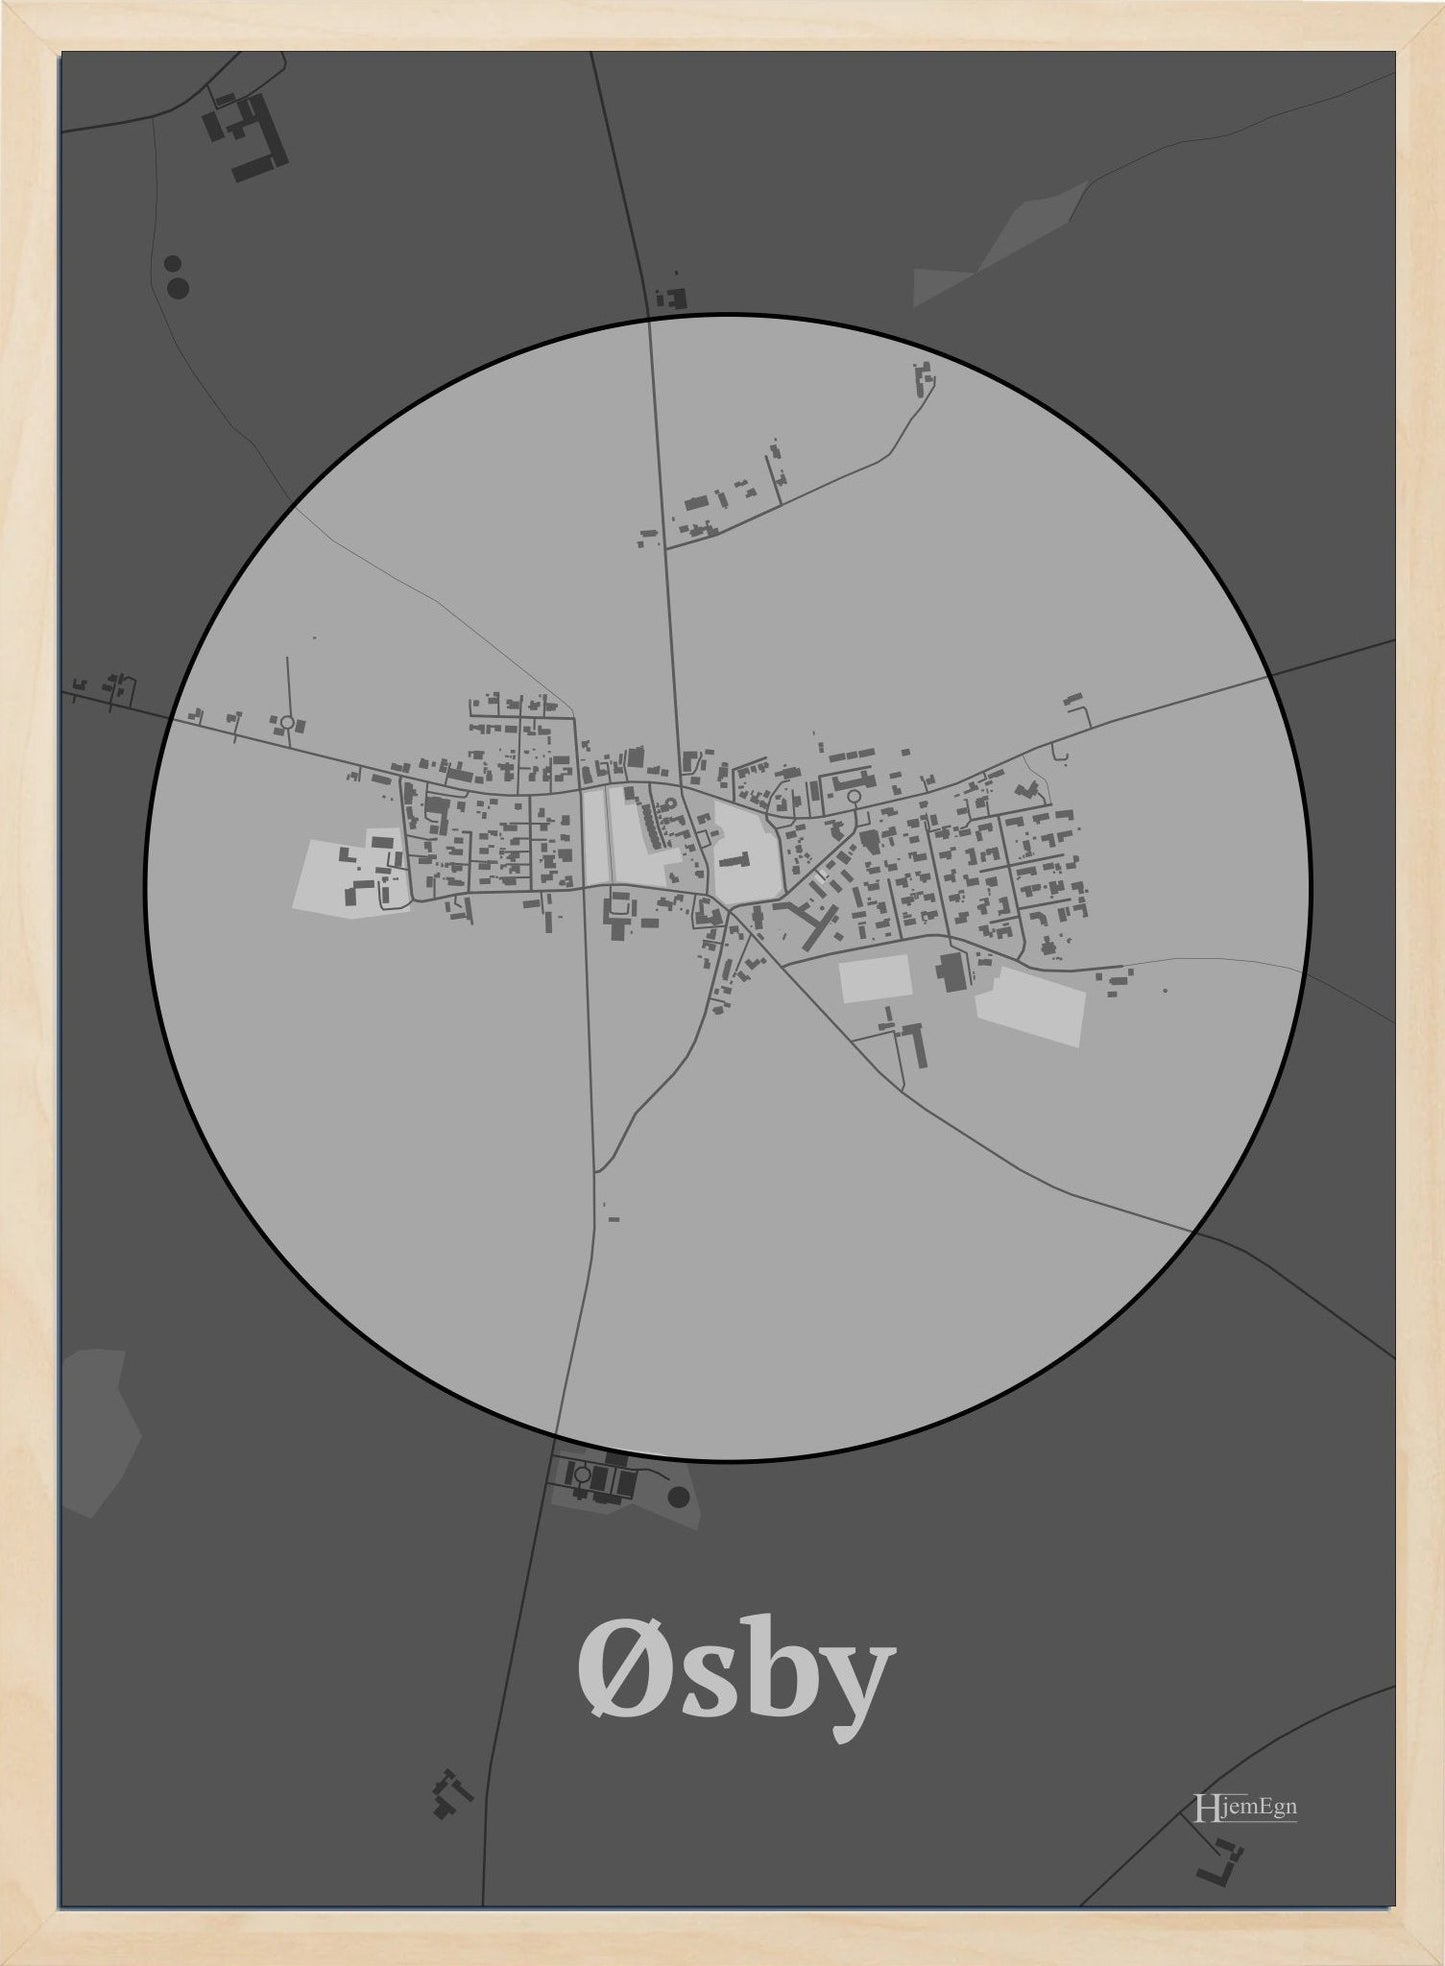 Øsby plakat i farve pastel grå og HjemEgn.dk design centrum. Design bykort for Øsby